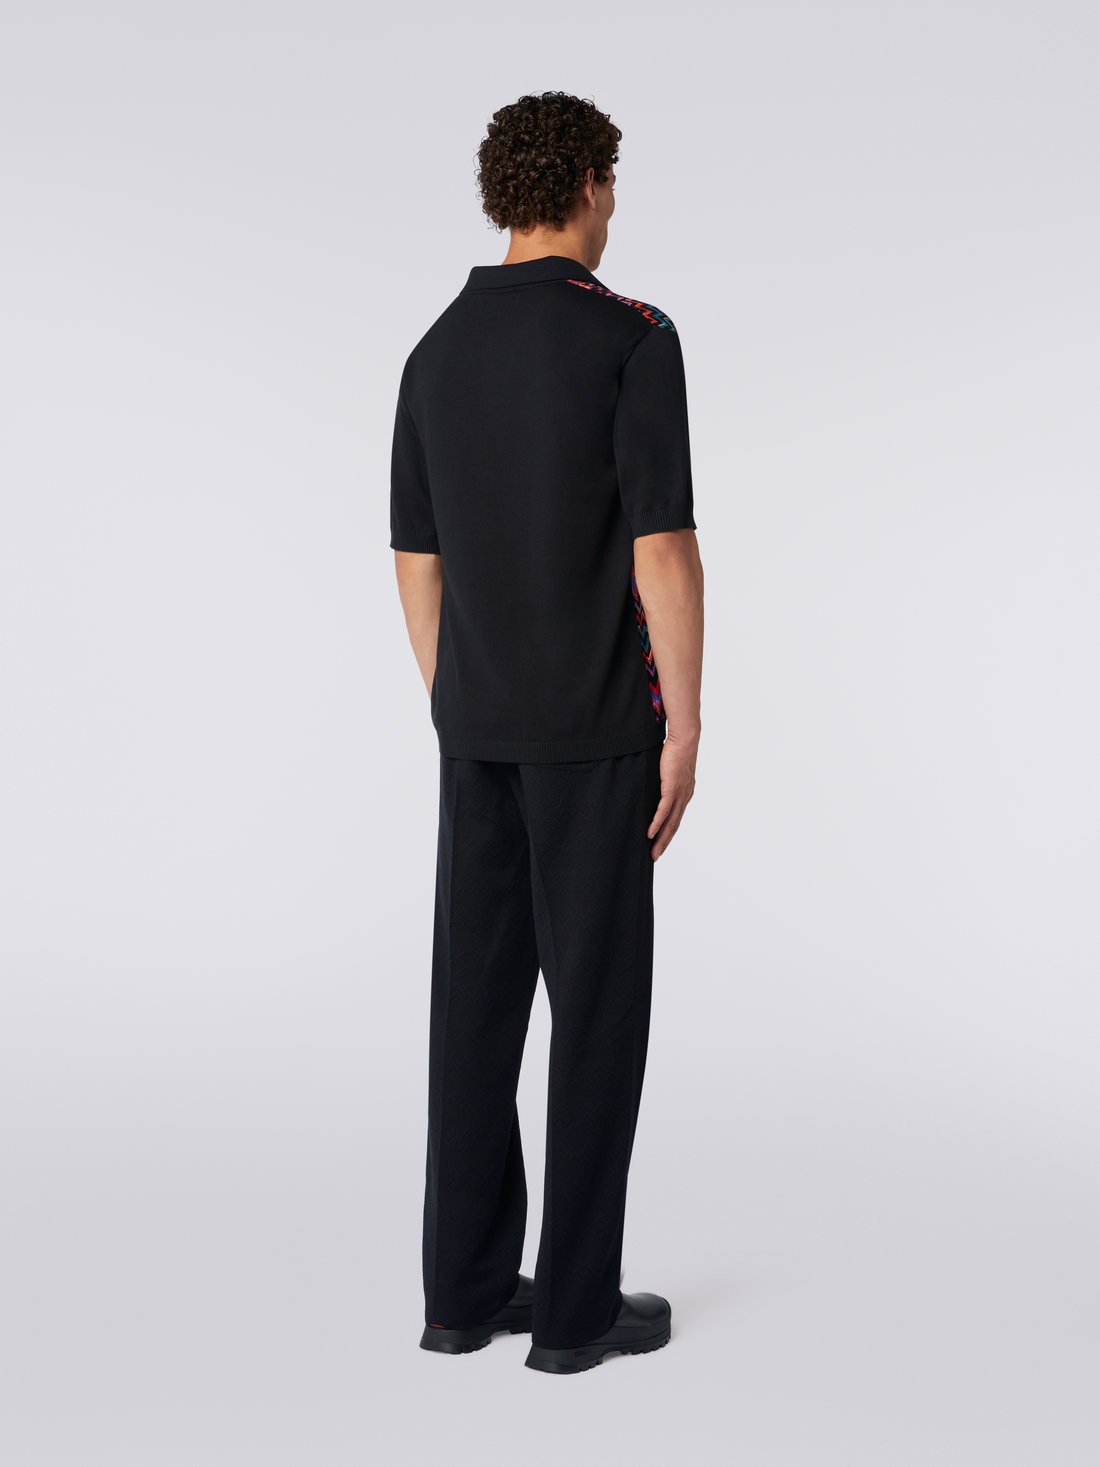 Short-sleeved polo shirt in cotton, viscose and silk chevron, Black    - US23W203BK026MSM8WN - 3